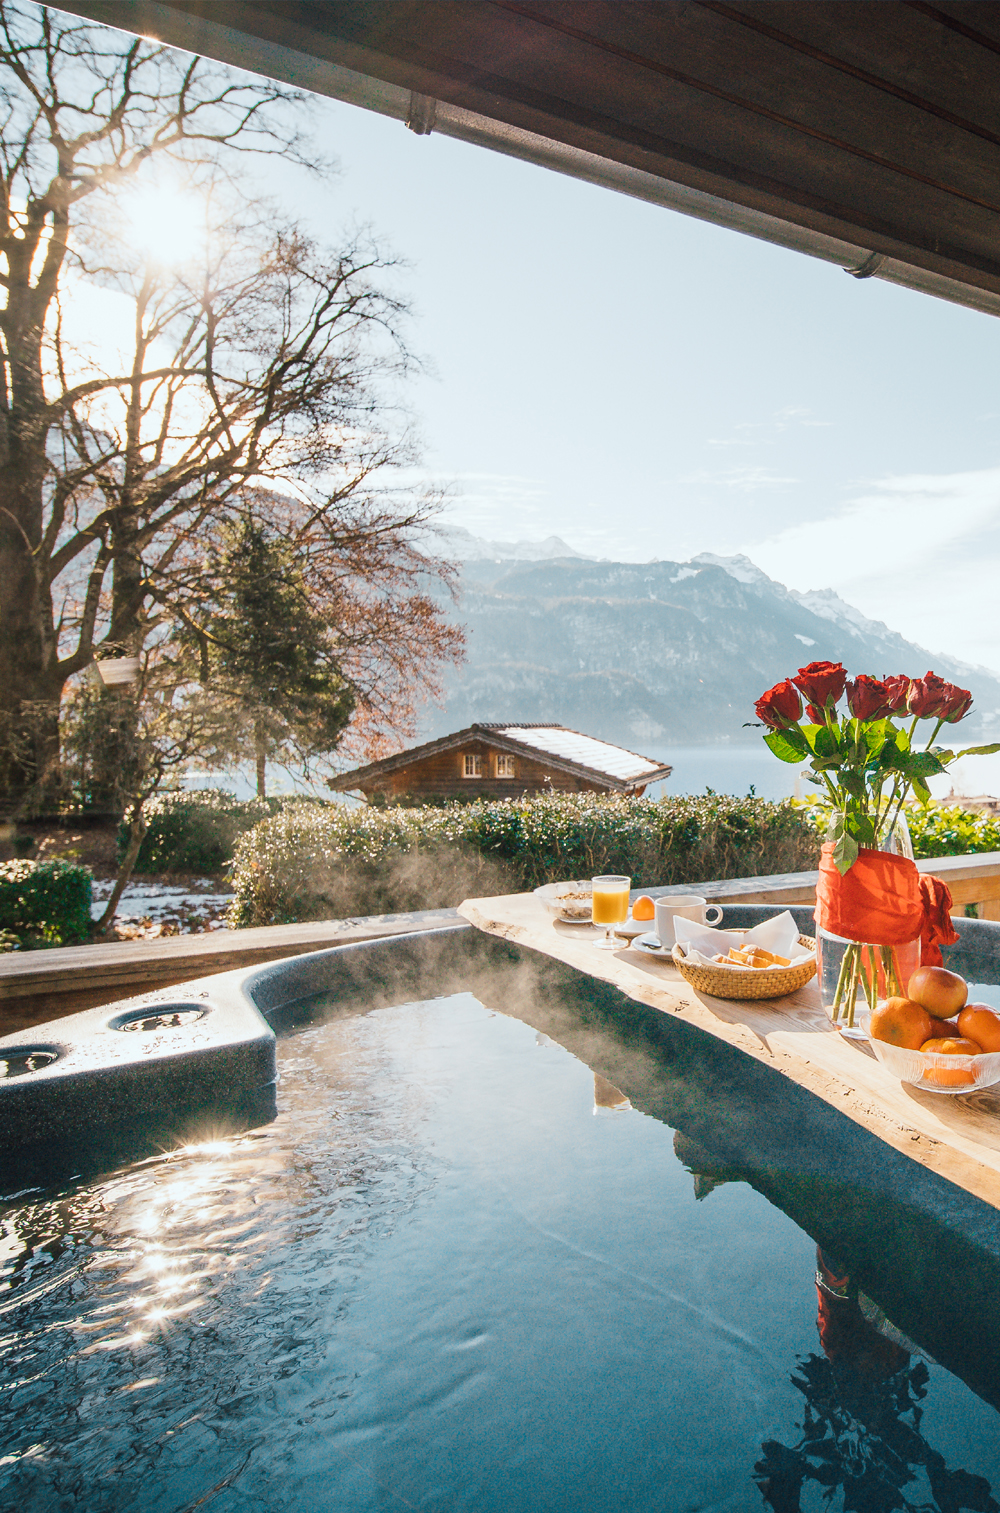 Lindenhof Brienz - Relaxation and natural beauty near Lake Brienz in Switzerland